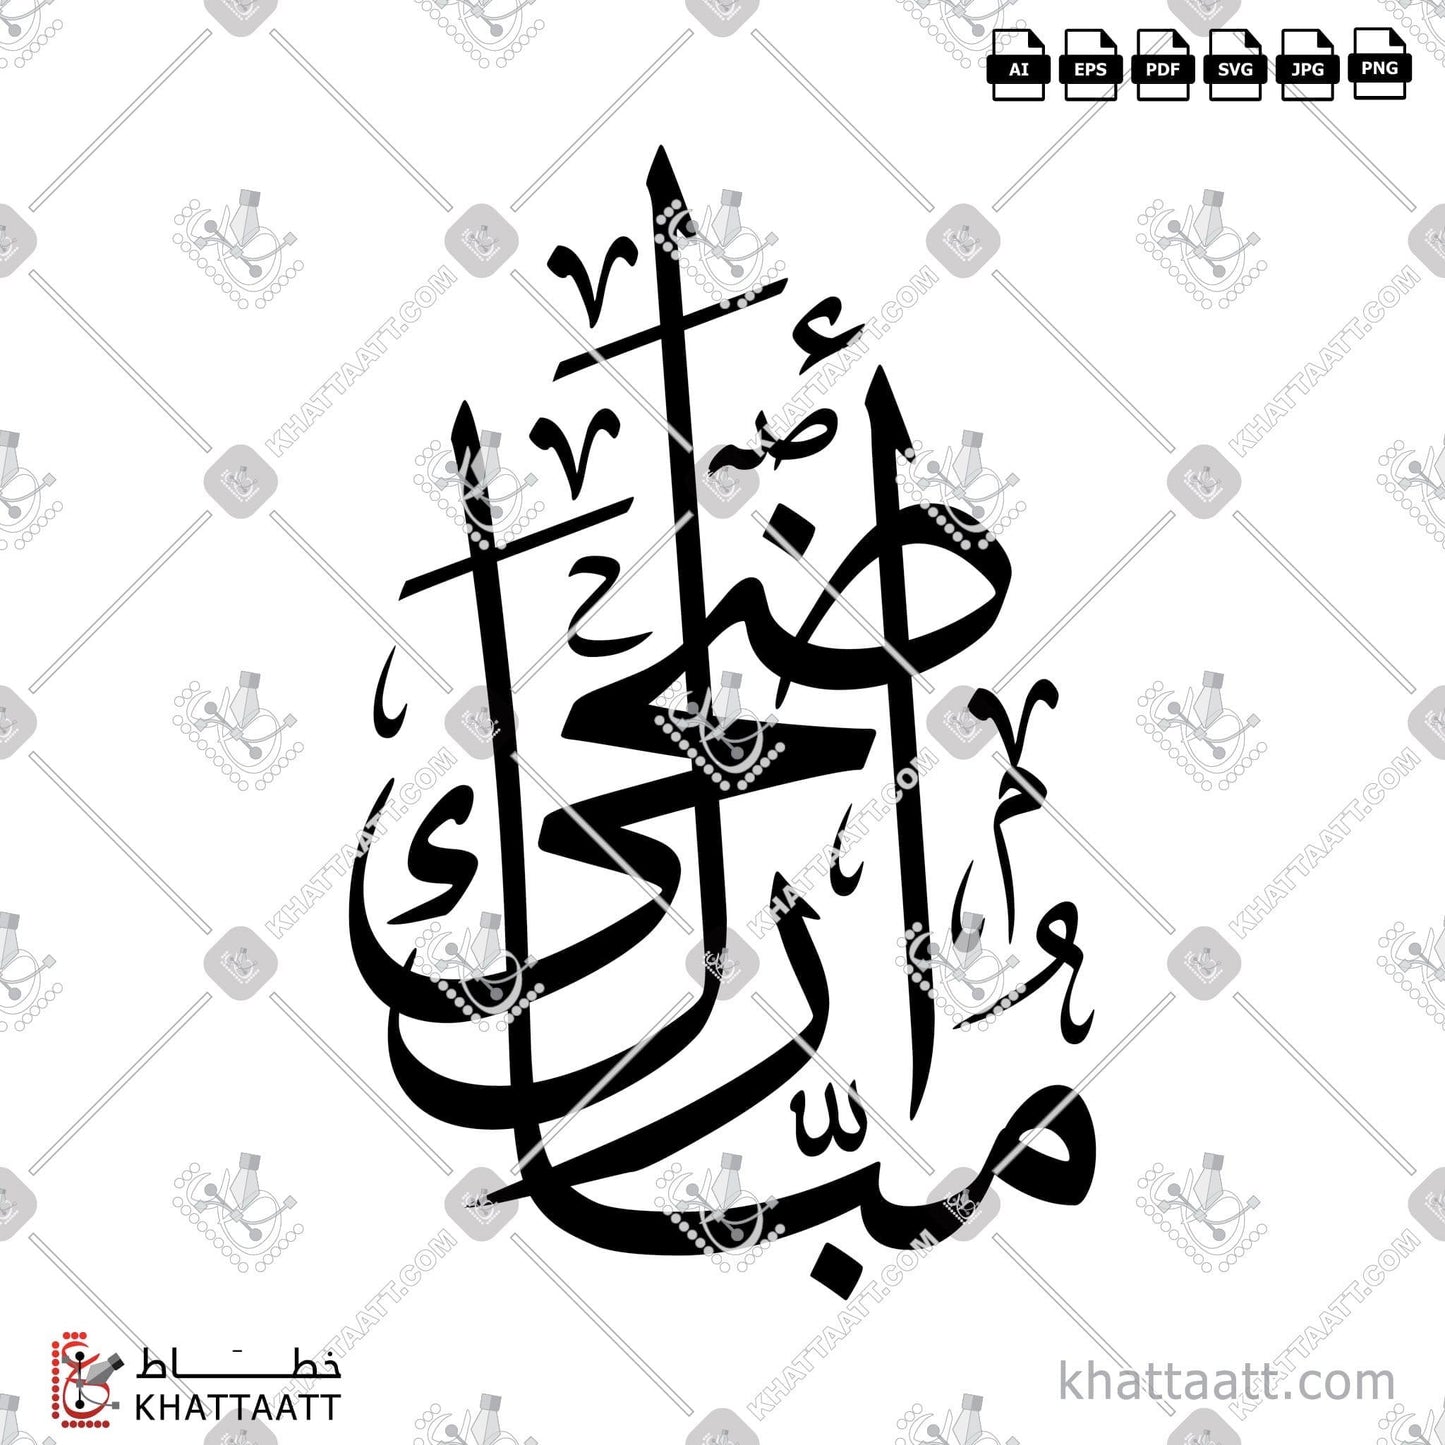 Download Arabic Calligraphy of Adha Mubarak - أضحى مبارك in Thuluth - خط الثلث in vector and .png